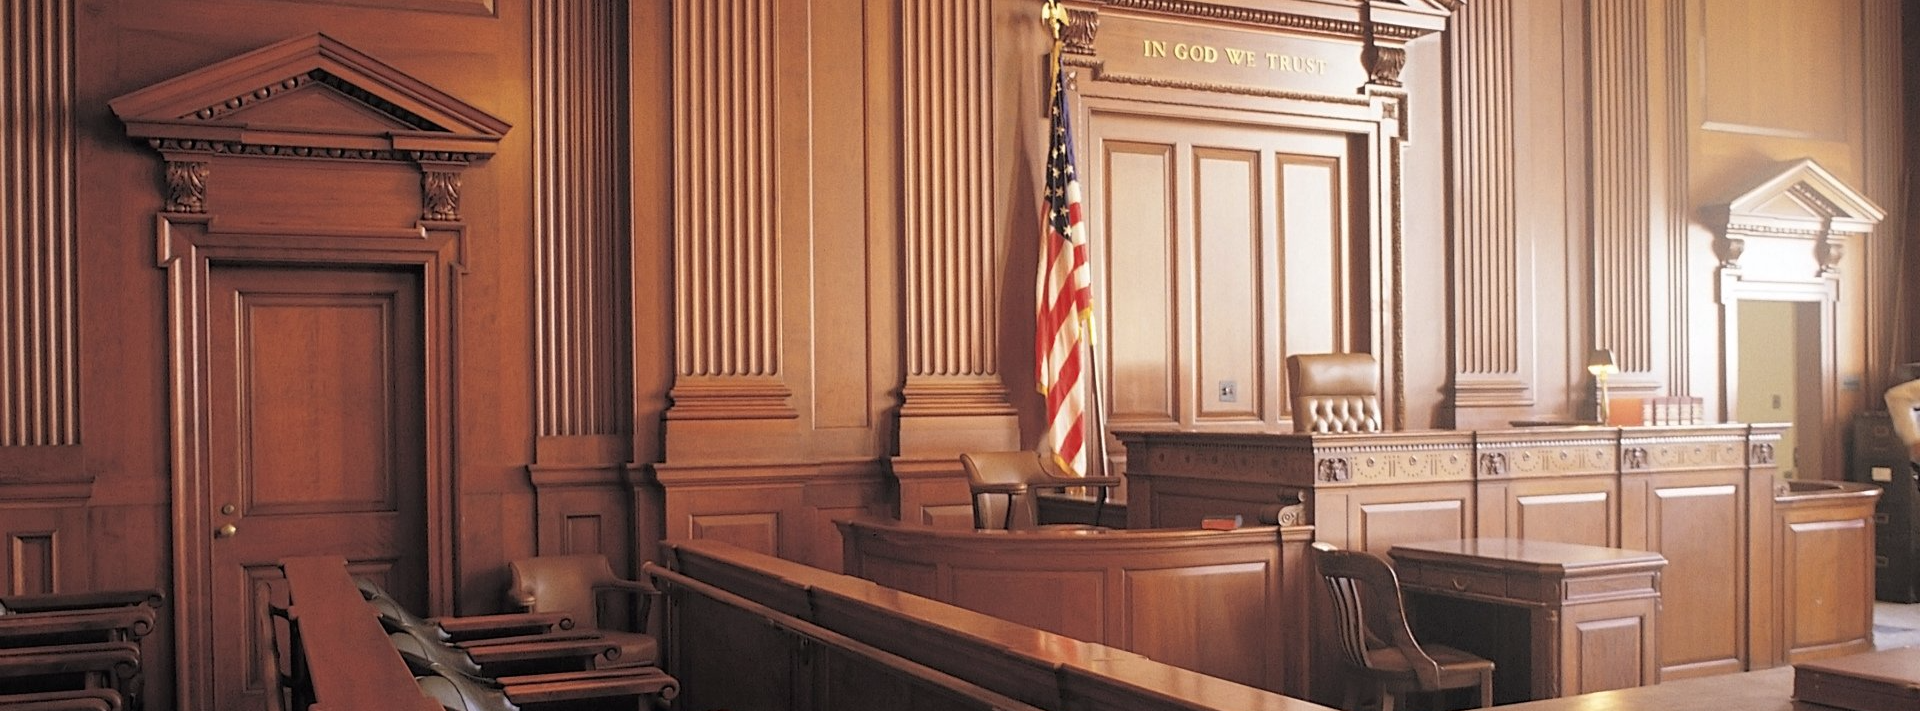 large courtroom